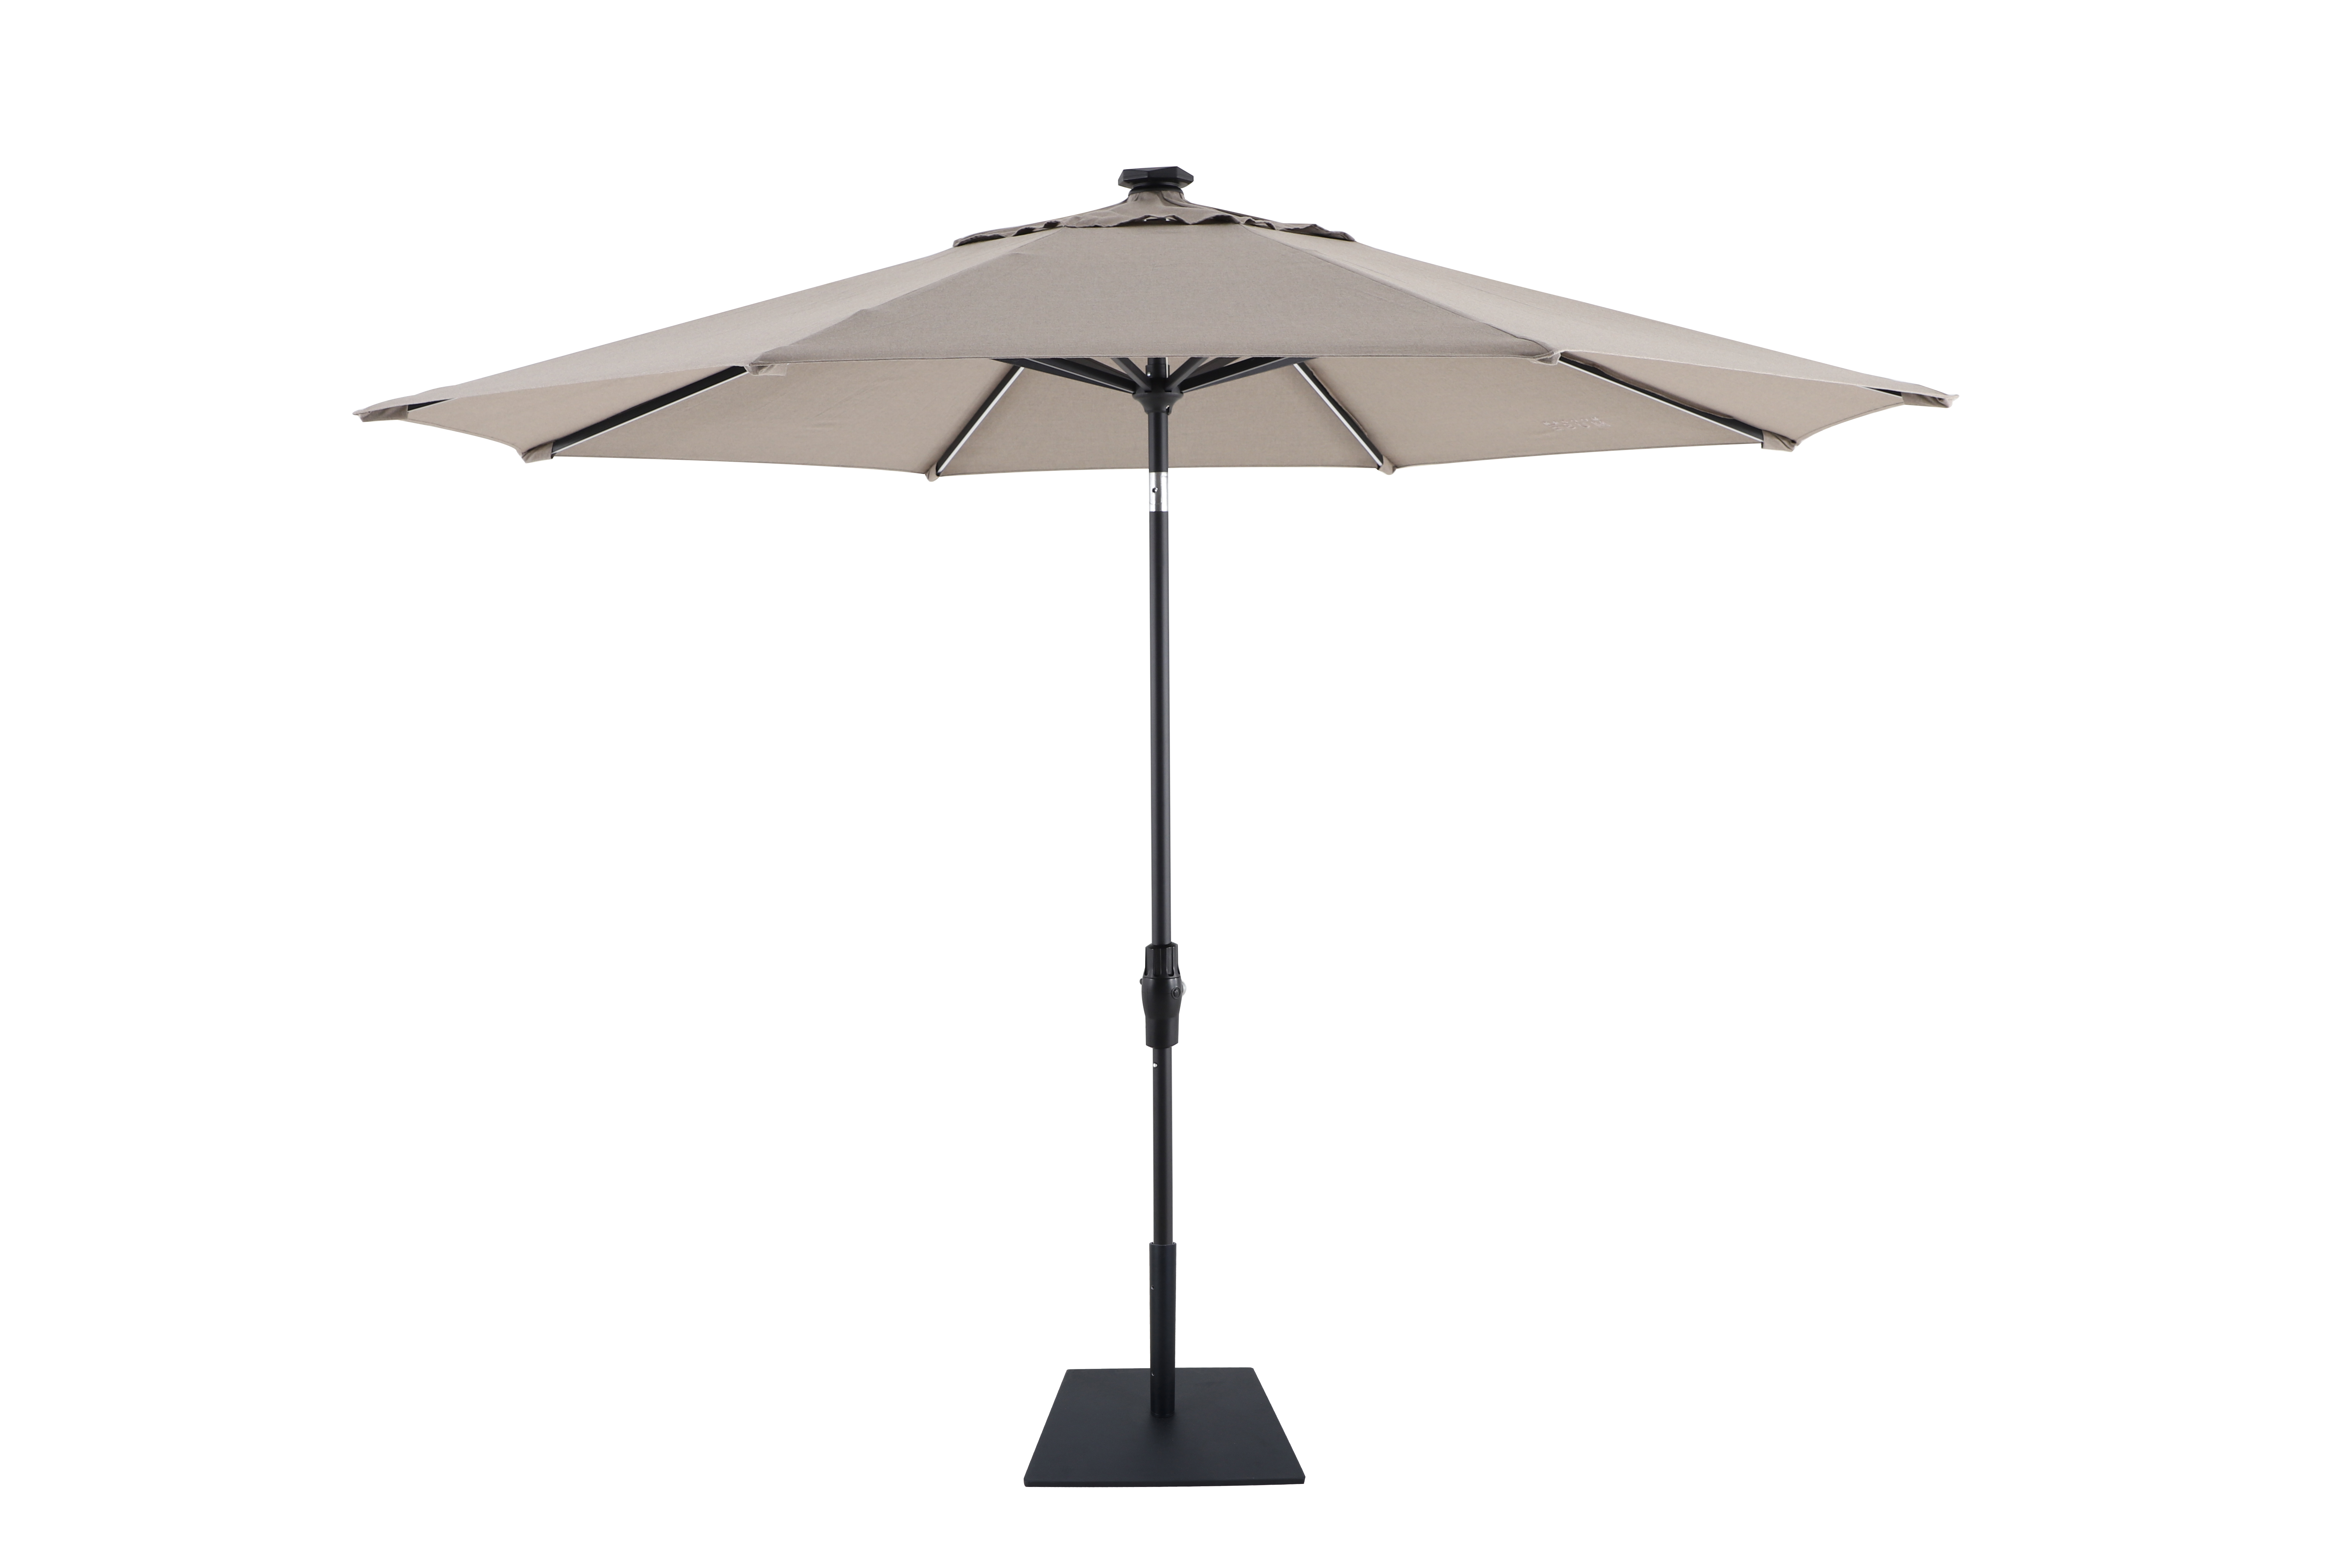 10ft LED light Infinite angle tilting Aluminum Commercial Market Umbrella, Mirihi